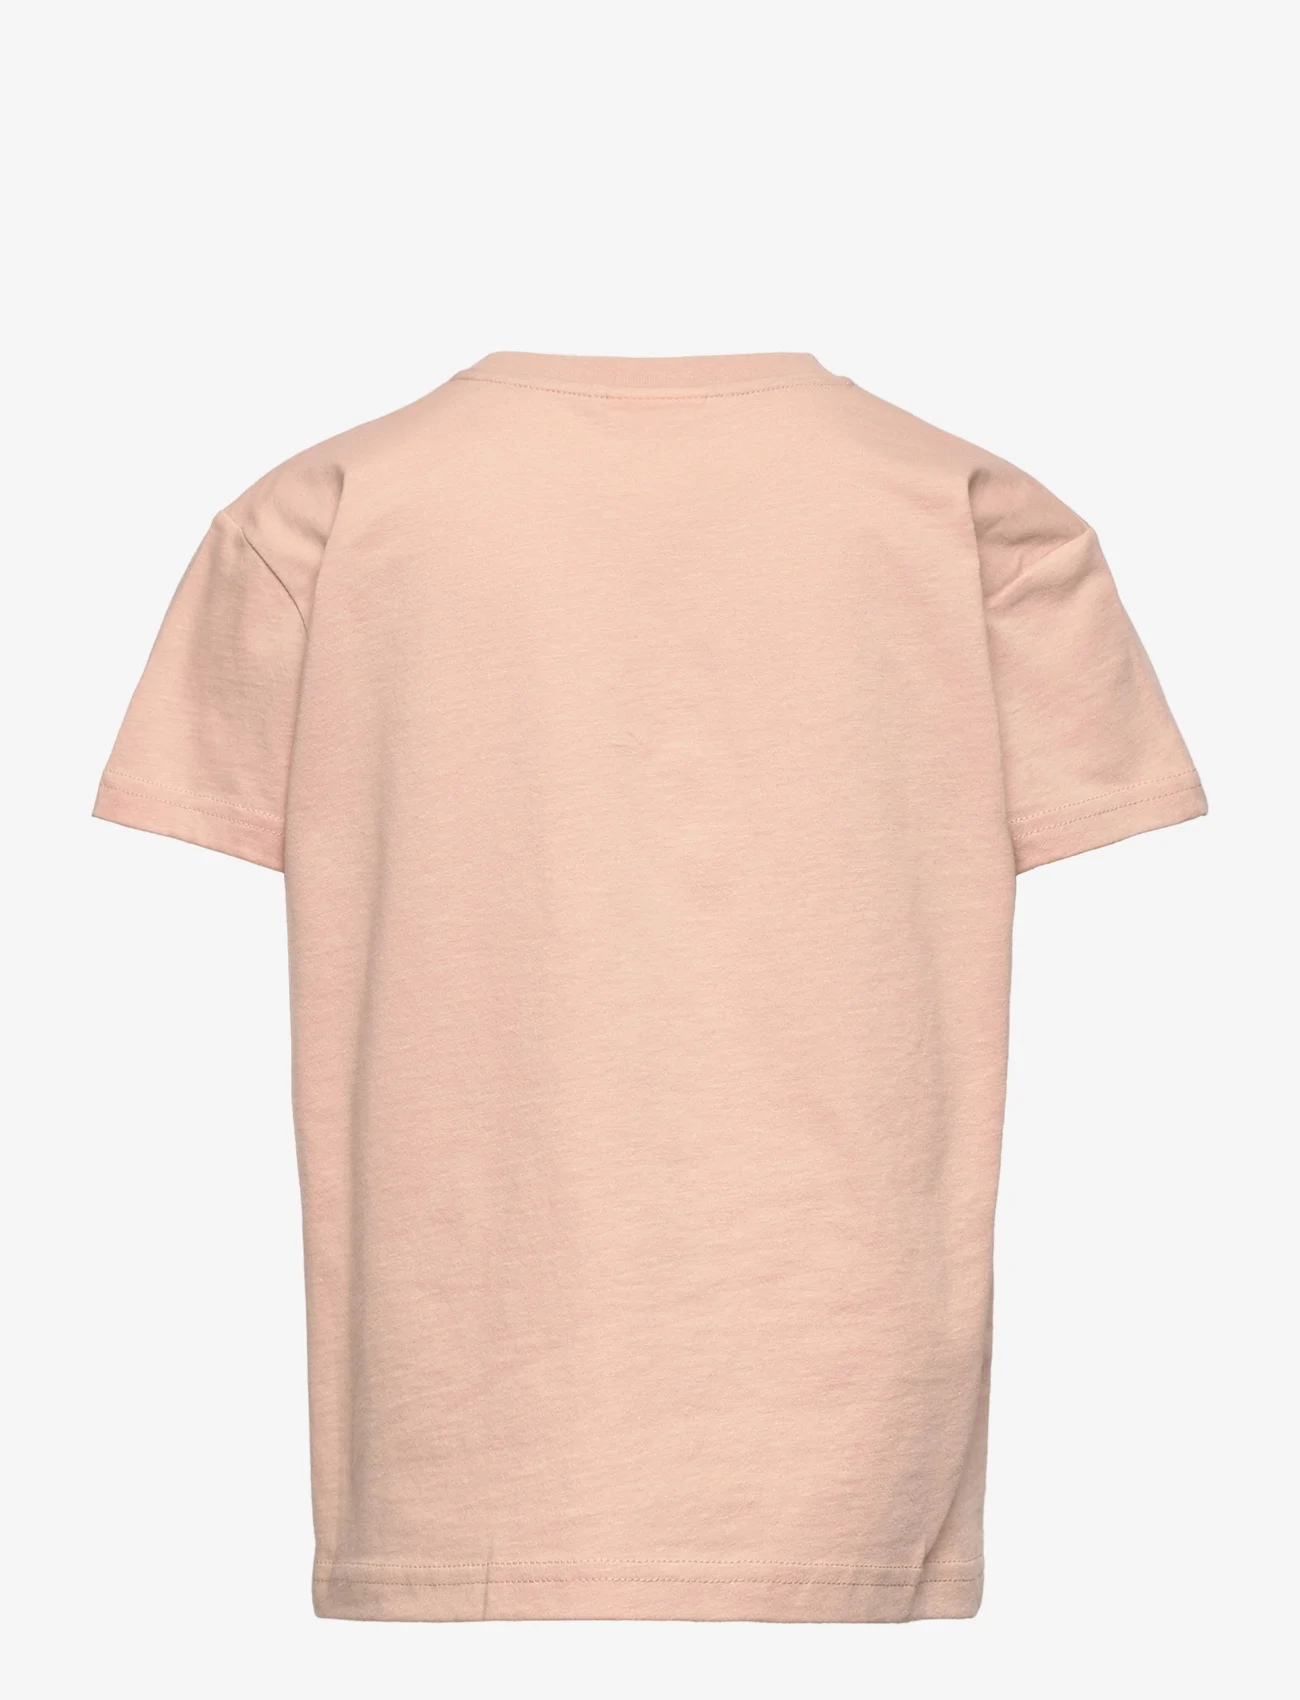 Sofie Schnoor Baby and Kids - T-shirt - kortærmede t-shirts - light rose - 1